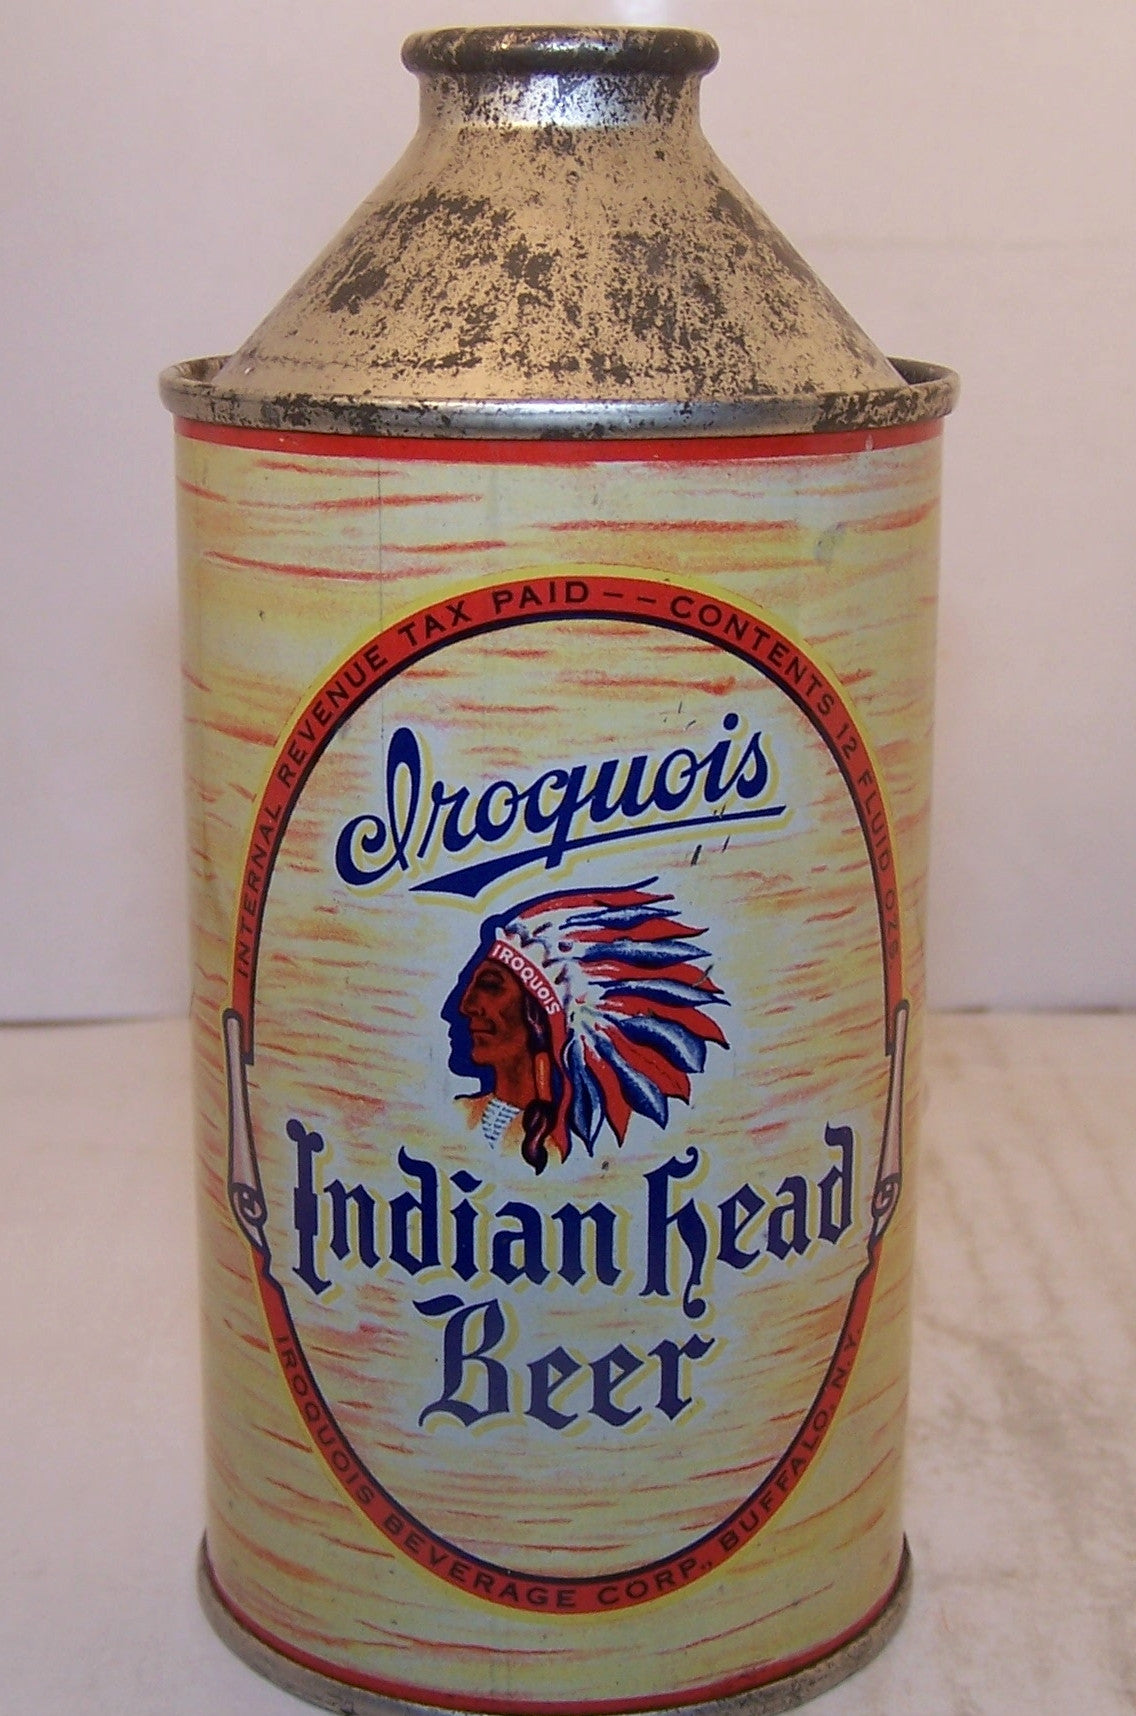 Iroquois Indian Head Beer, USBC 170-10 Grade 1/1+ Sold 2/28/15